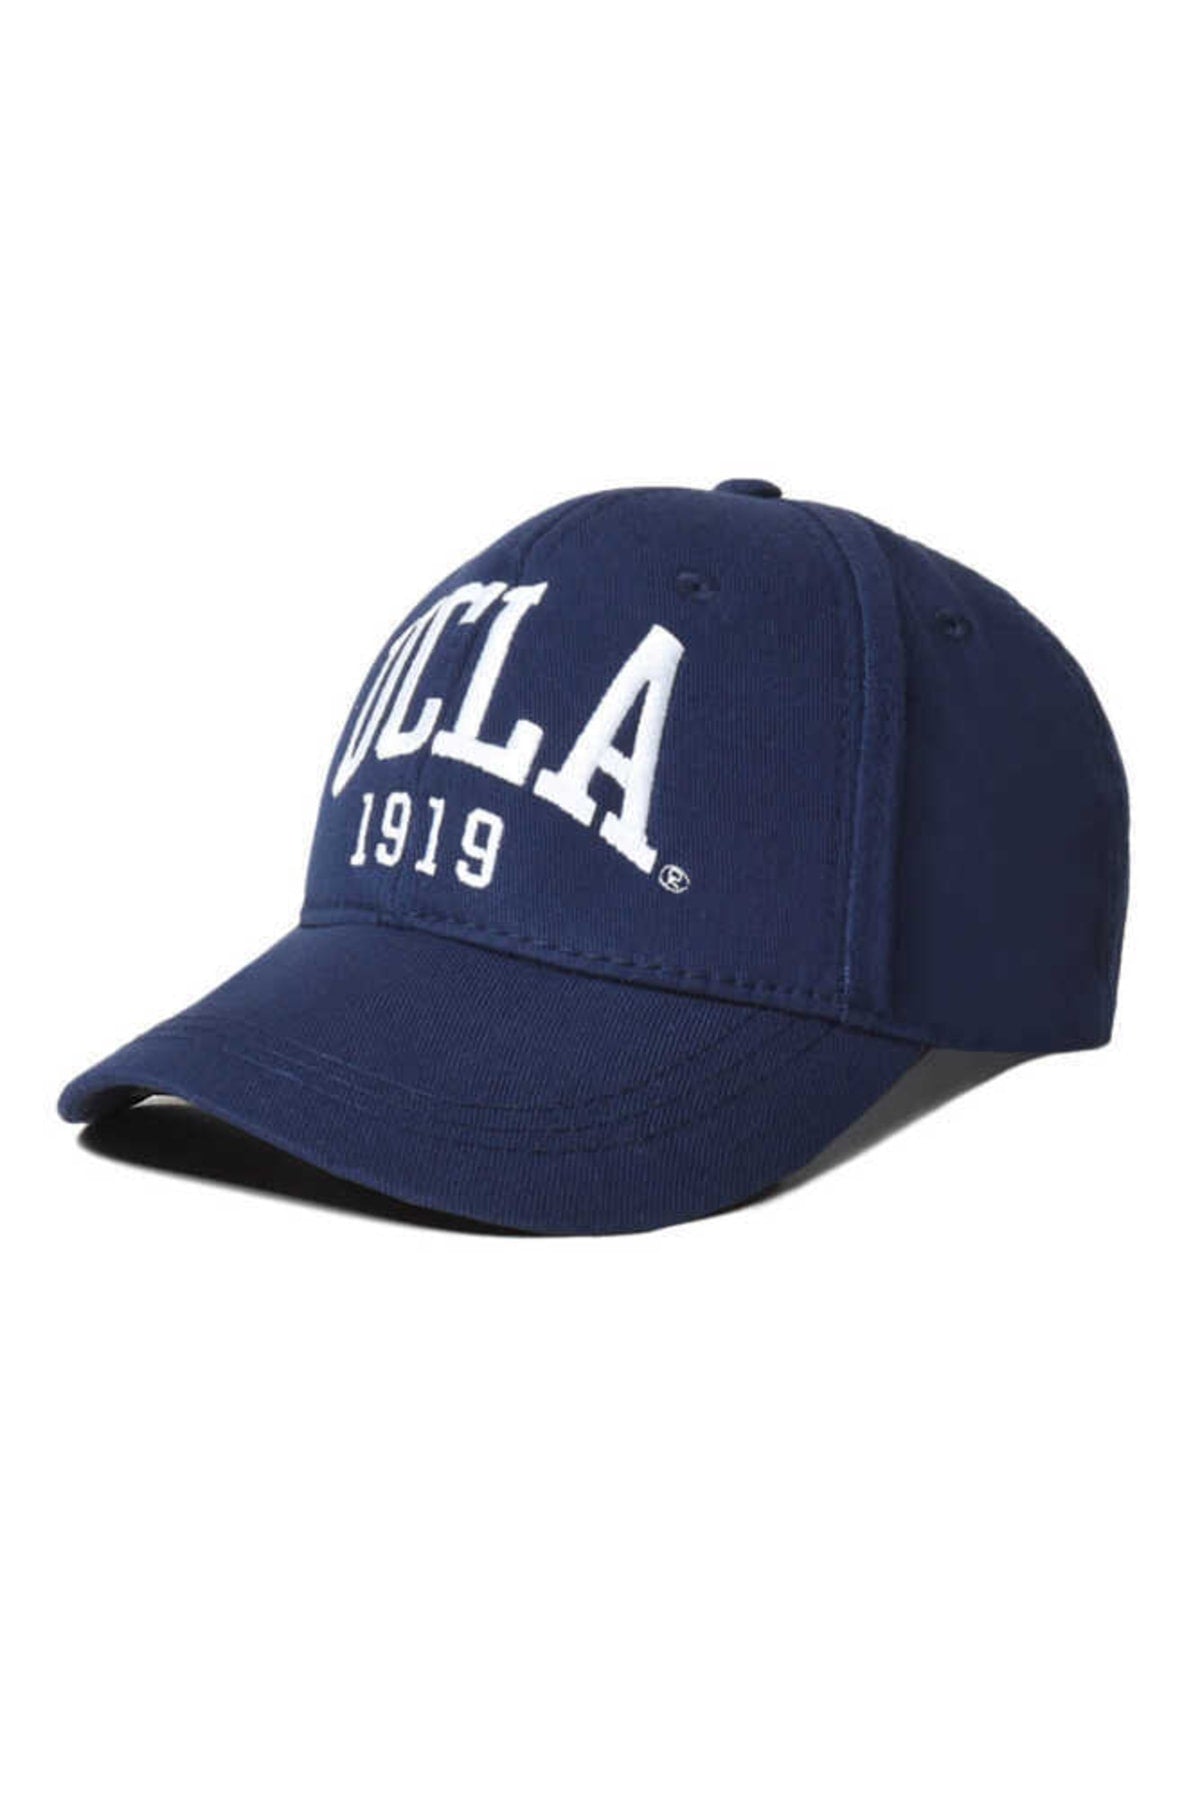 Ballard Navy Blue Baseball Cap Hat